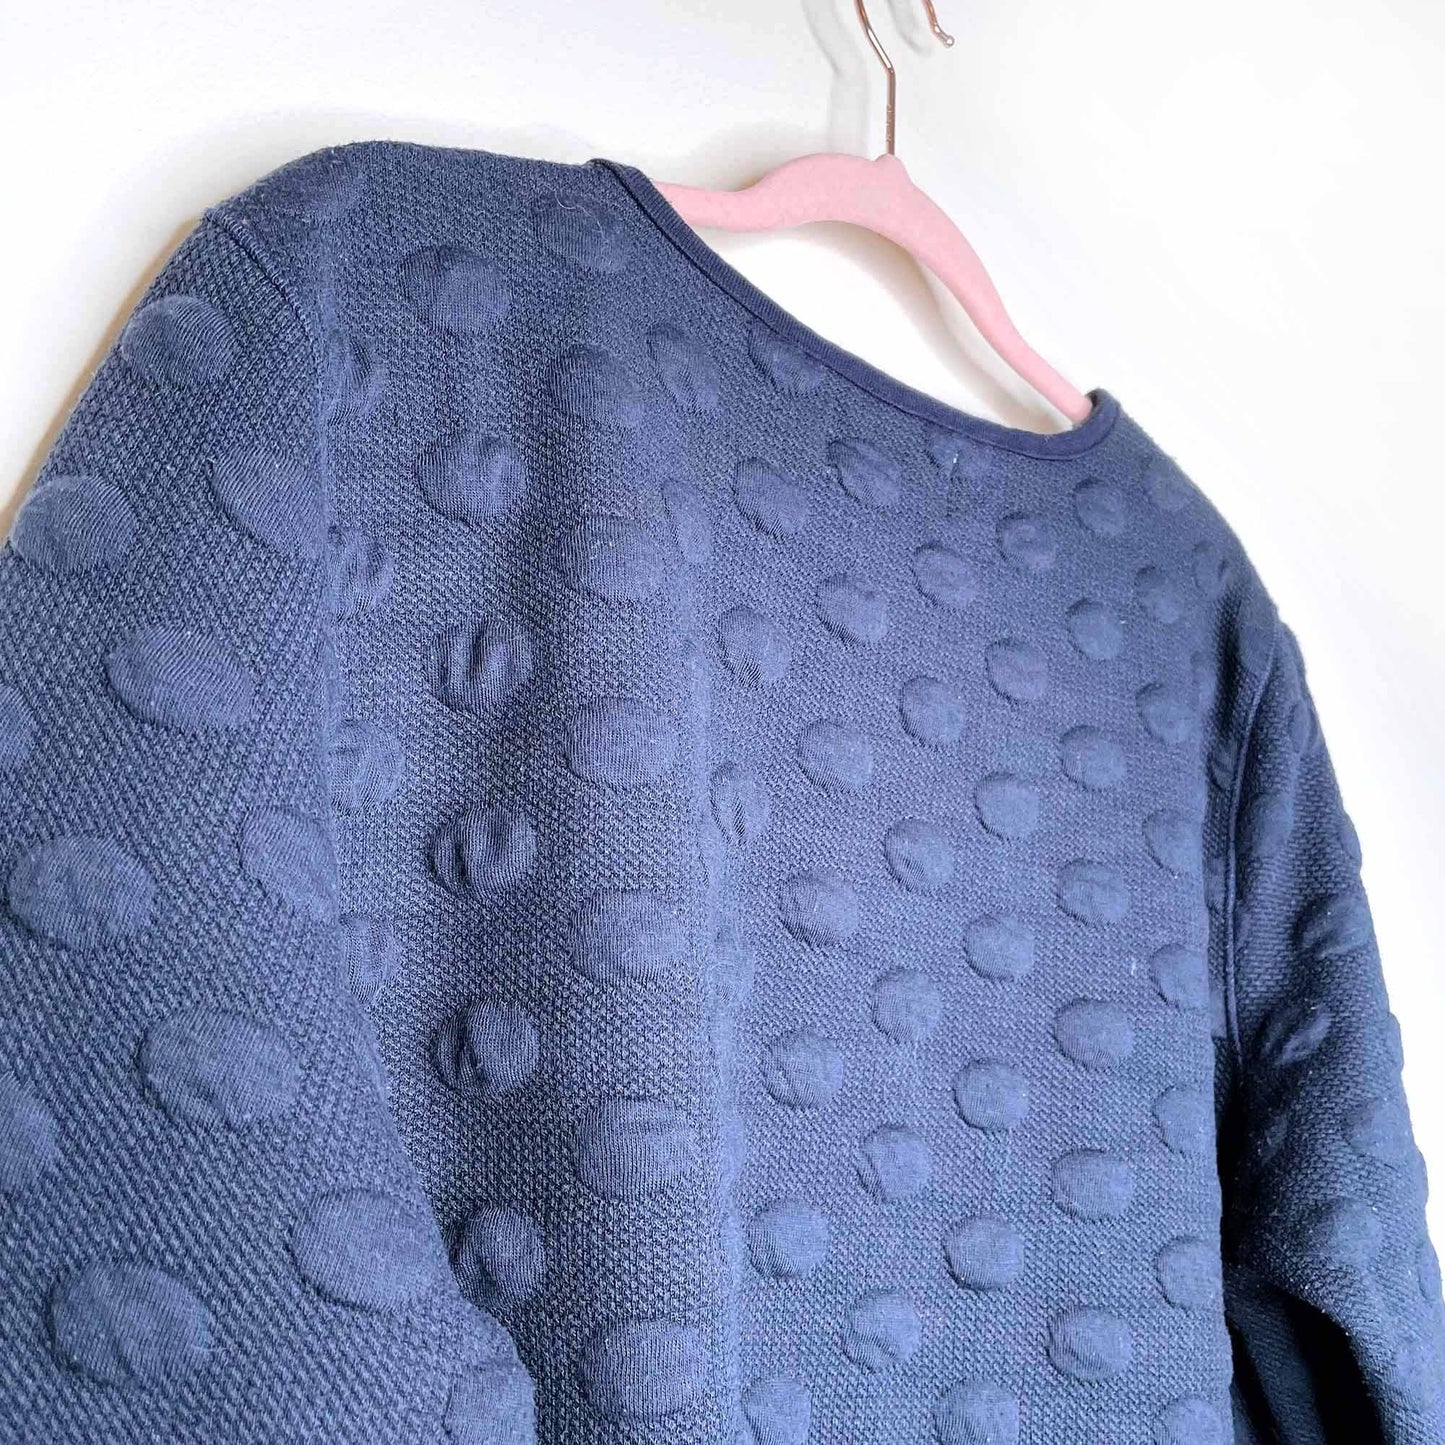 bruuns bazaar raised polka dot sweater with pockets - size xl